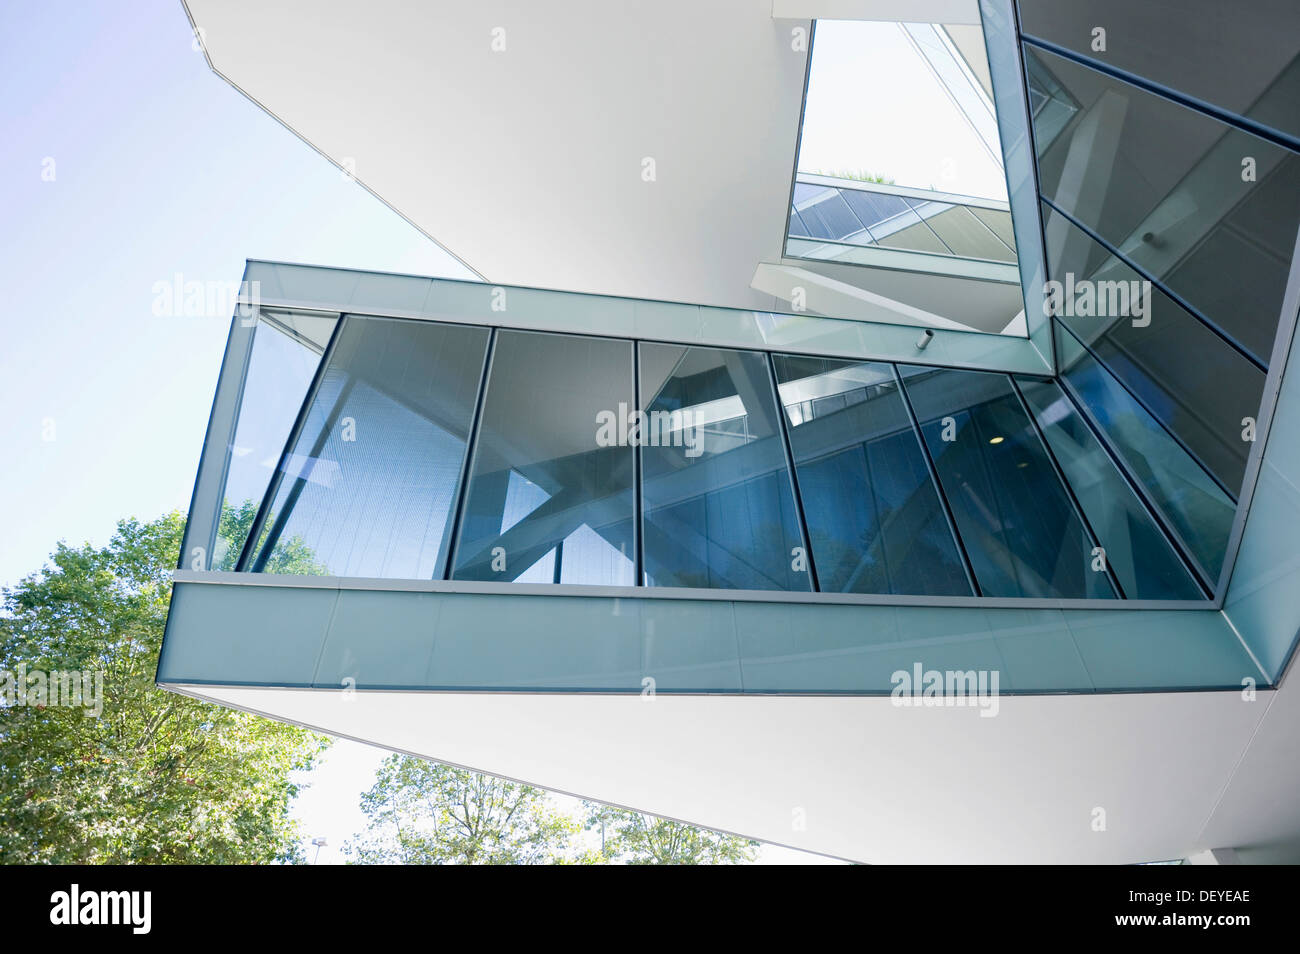 Actelion Business Center, designed by the architects Herzog & de Meuron, Allschwil, Basel, Switzerland Stock Photo